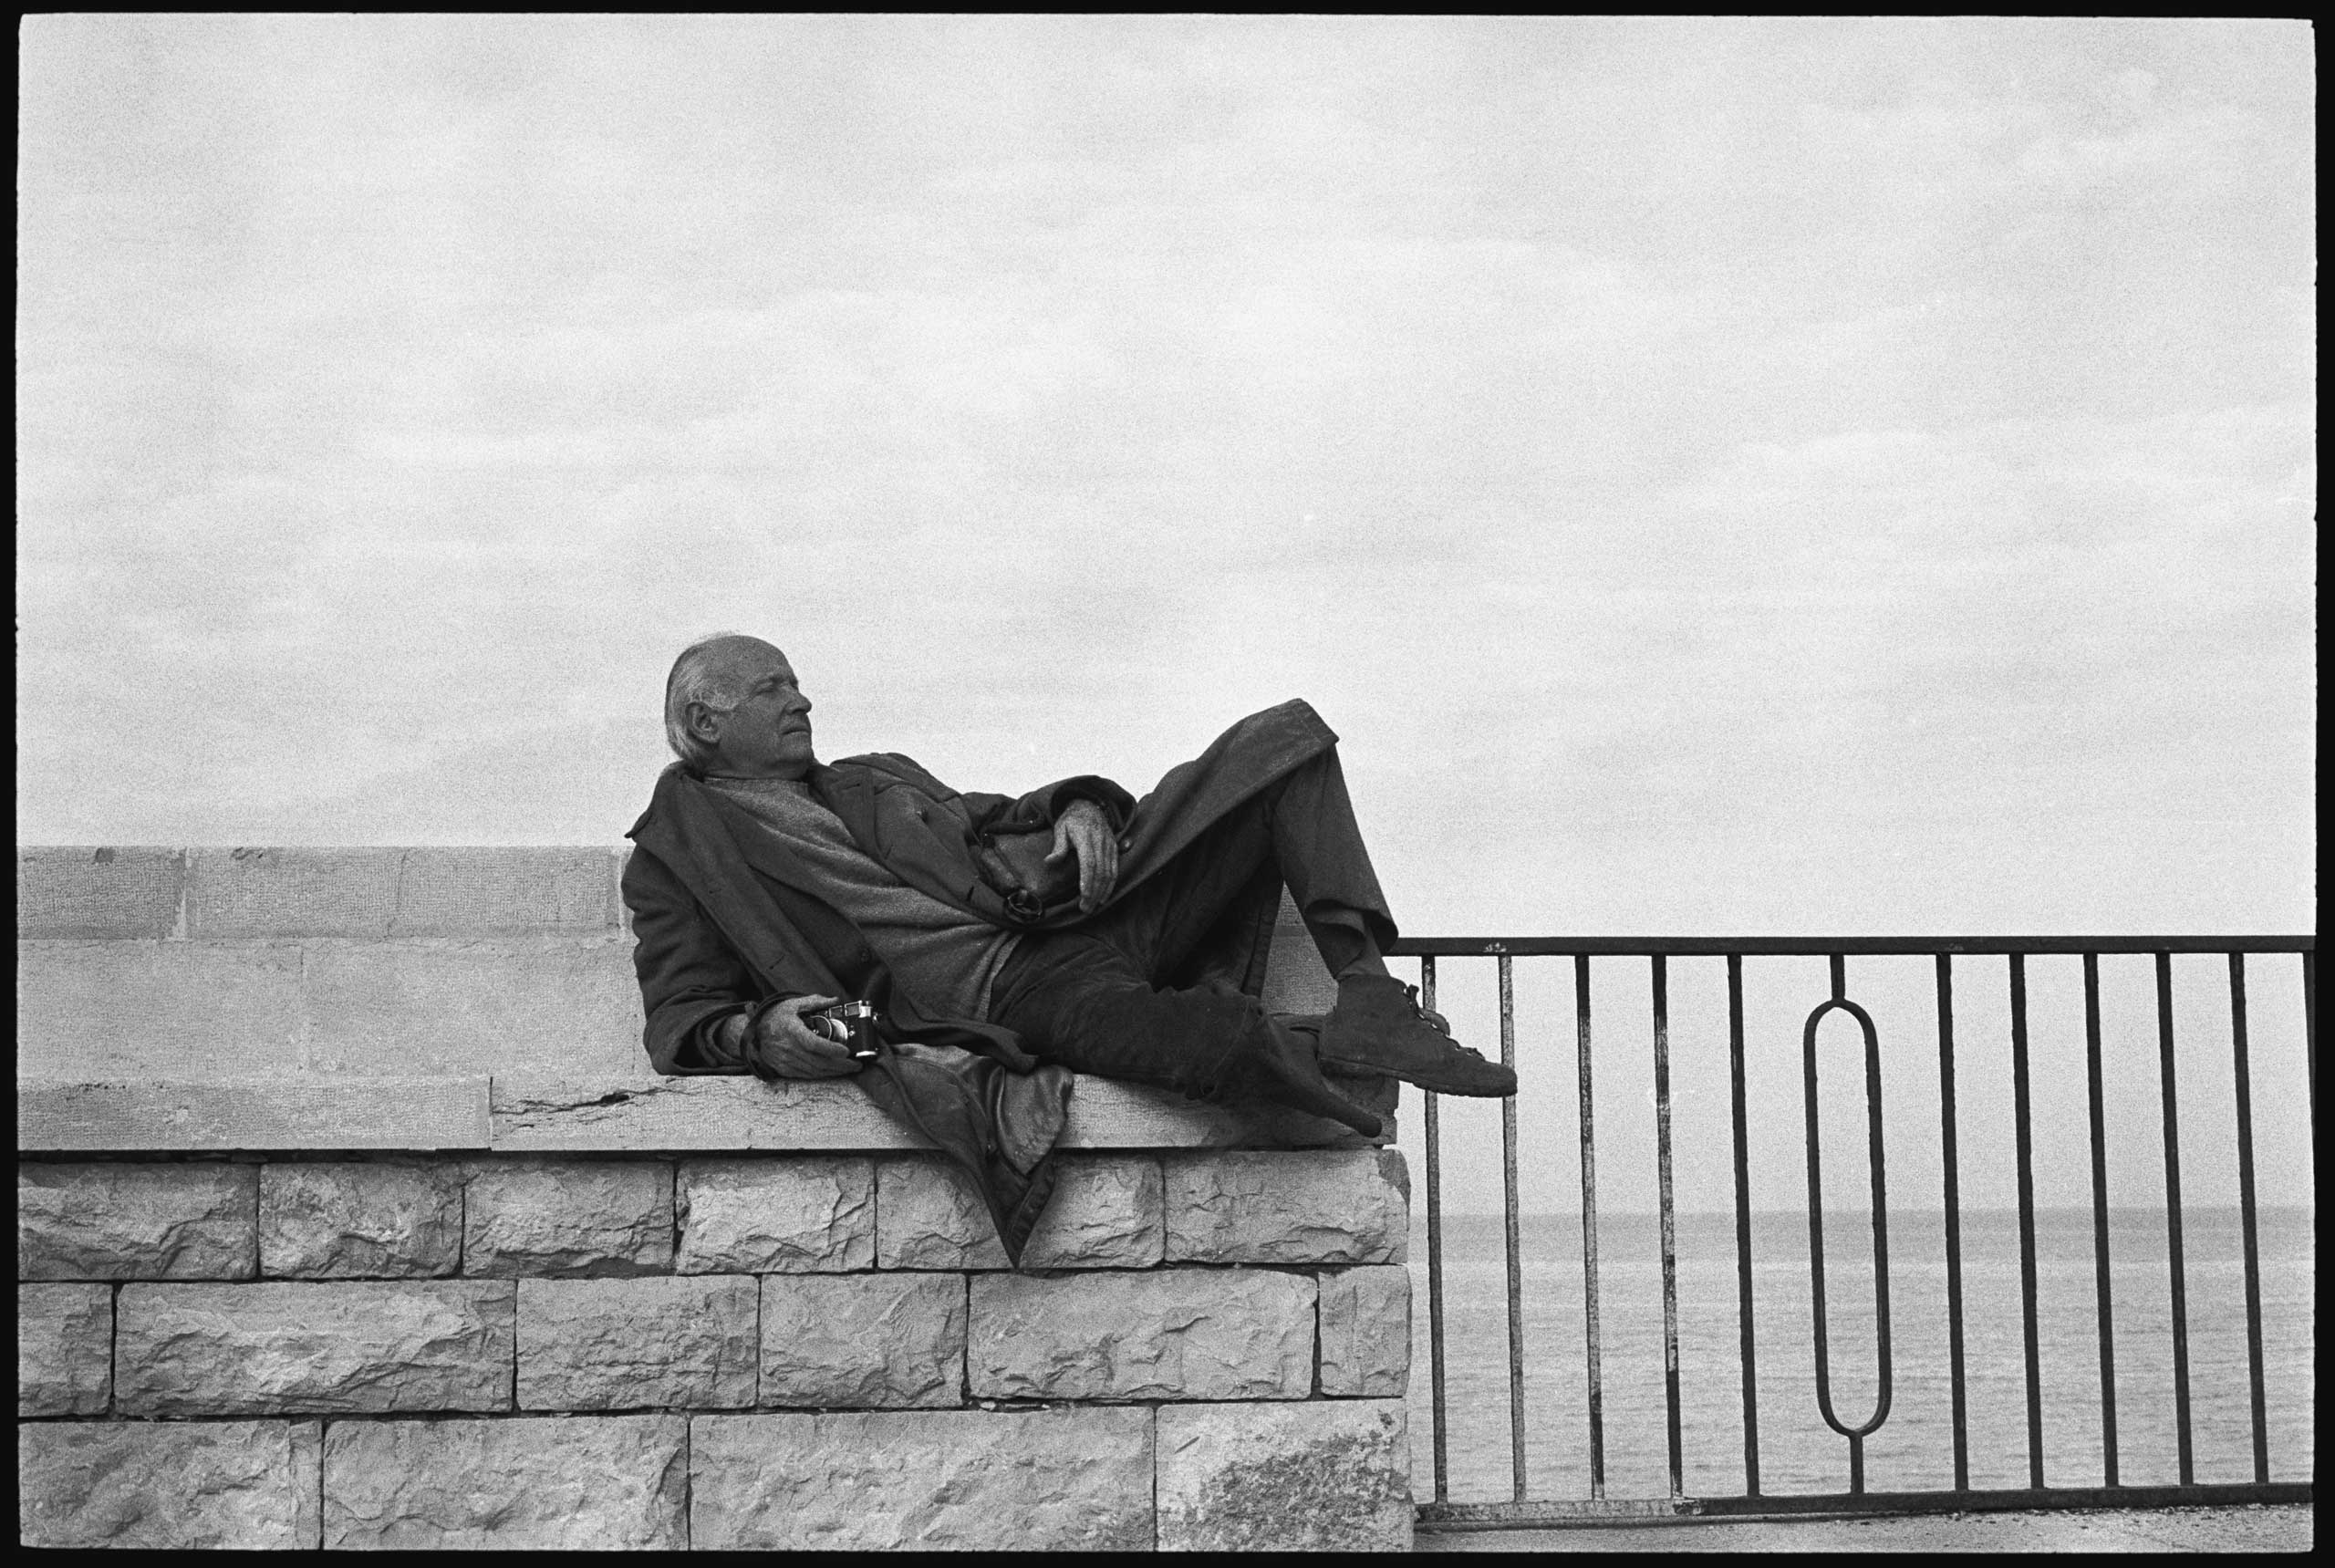 Henri Cartier-Bresson in Italy in 1971